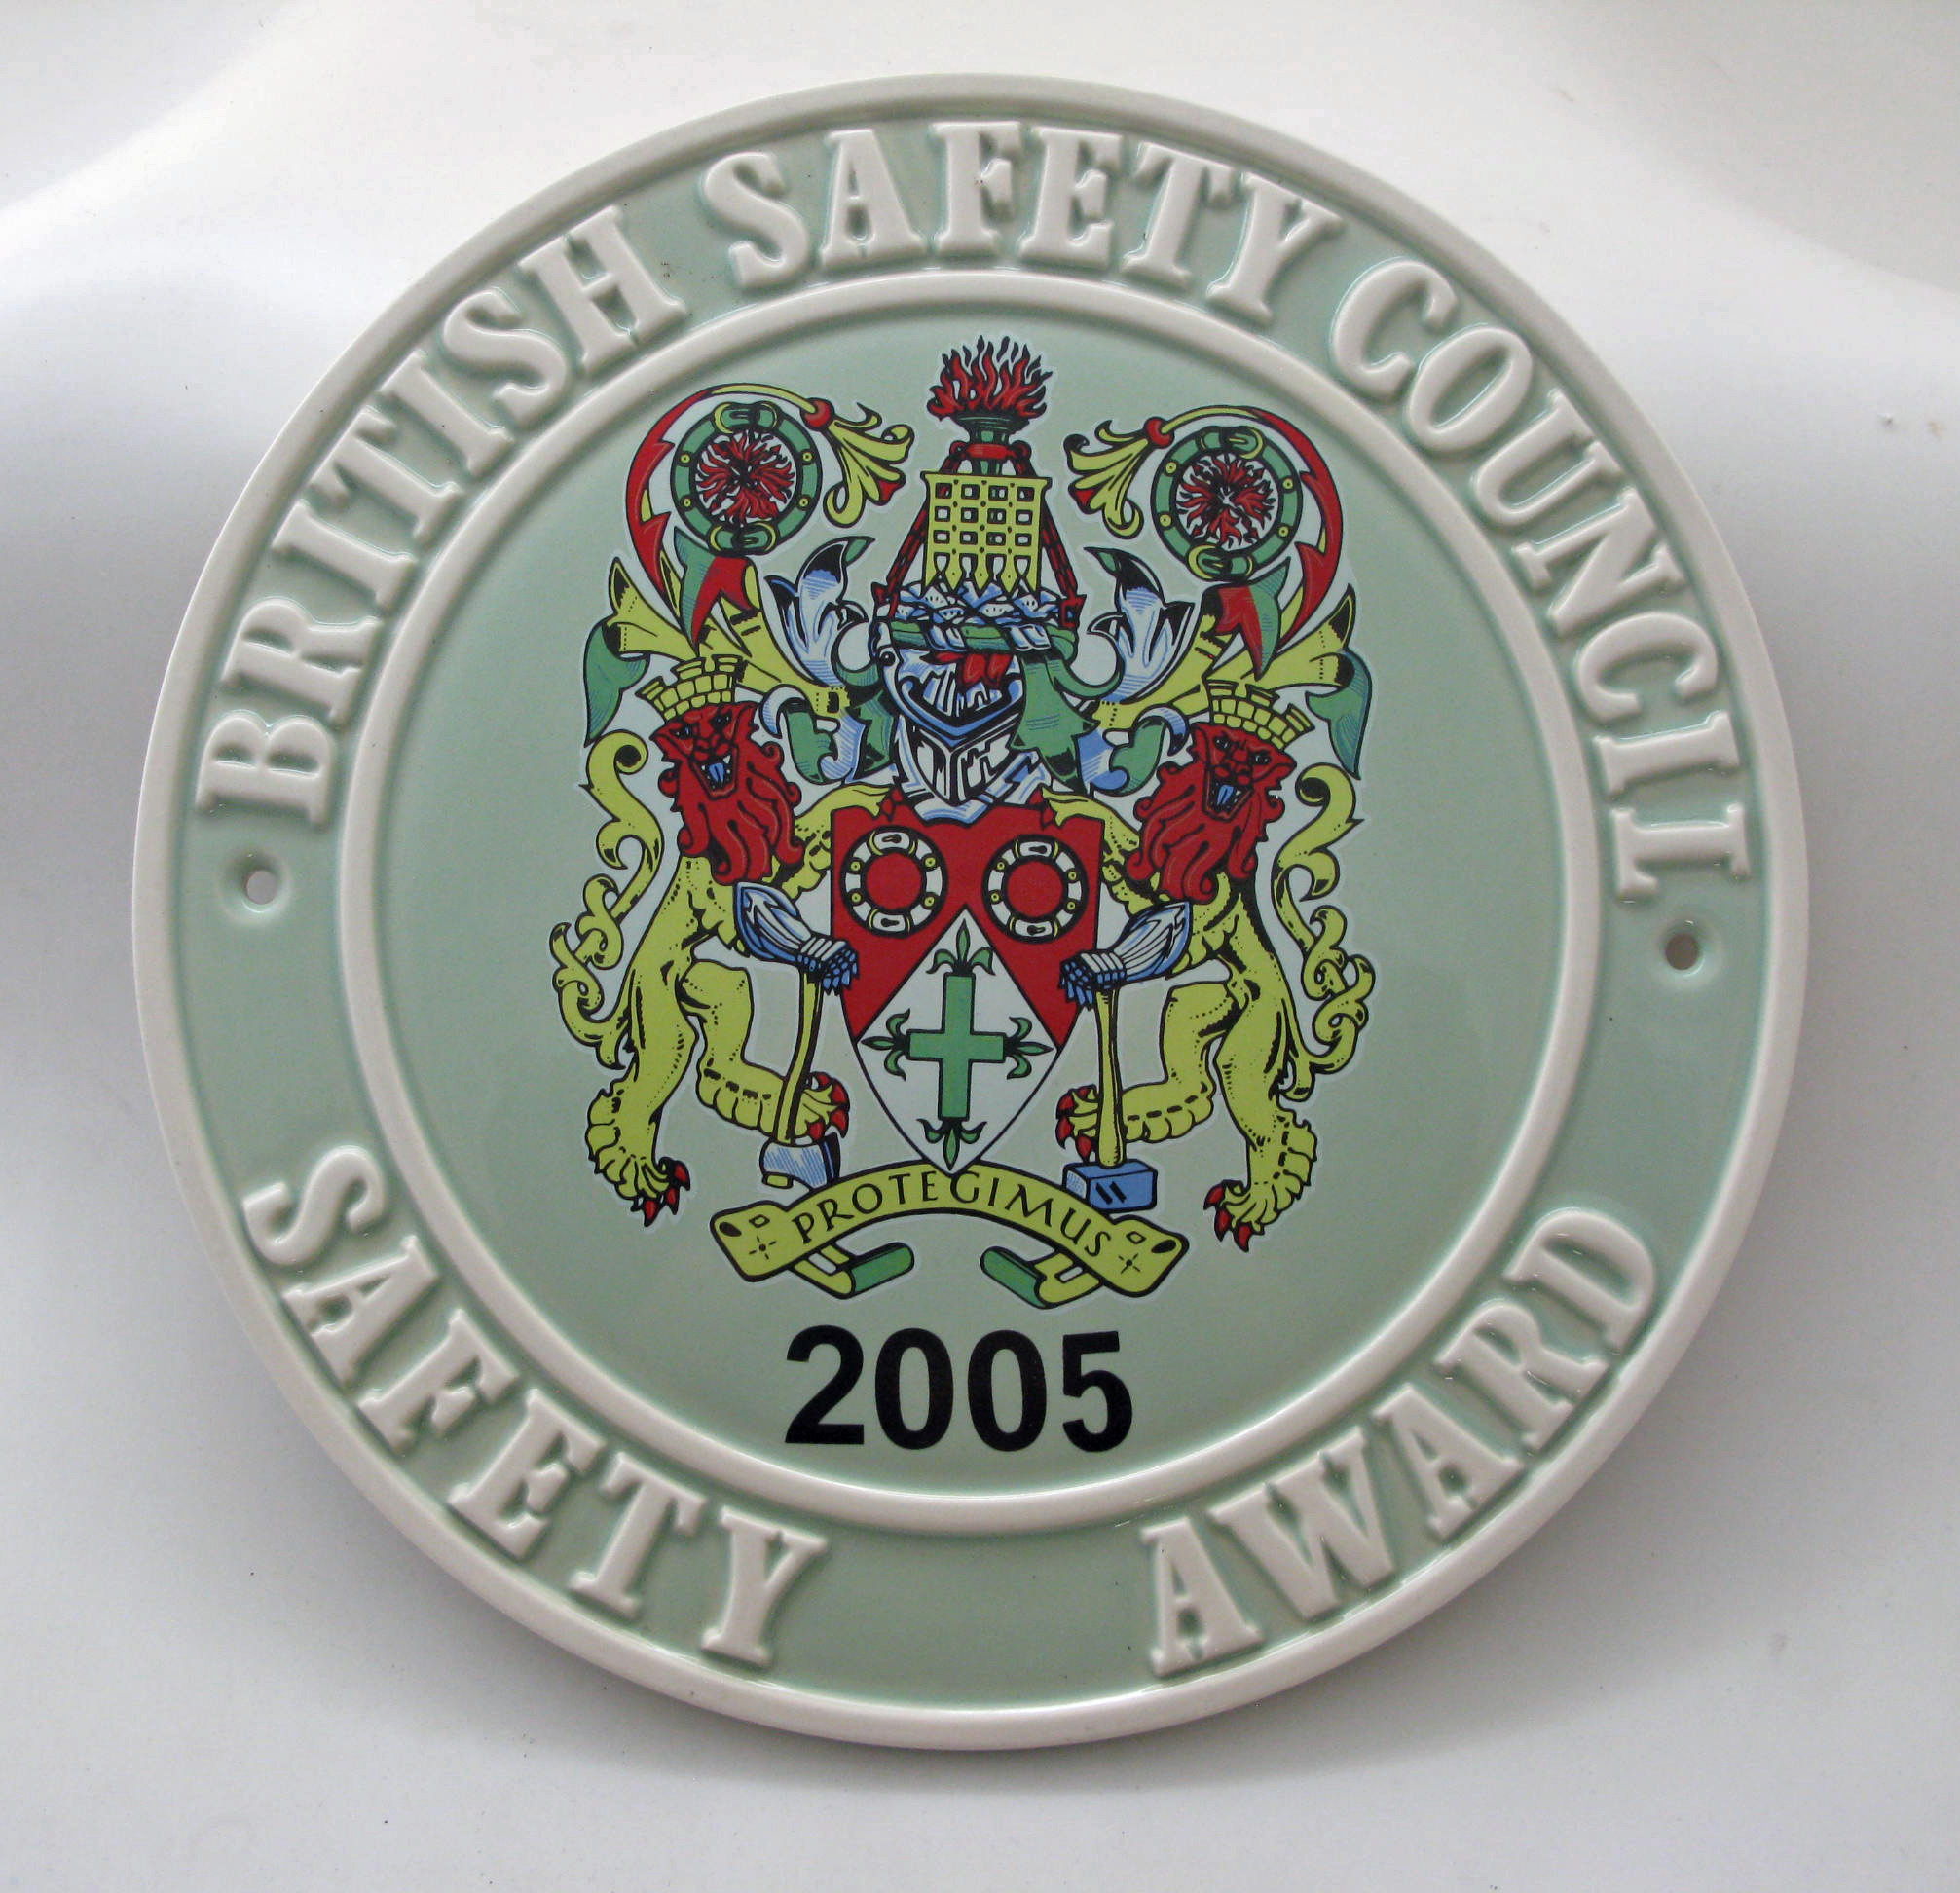 2005 Safety Award Plaque